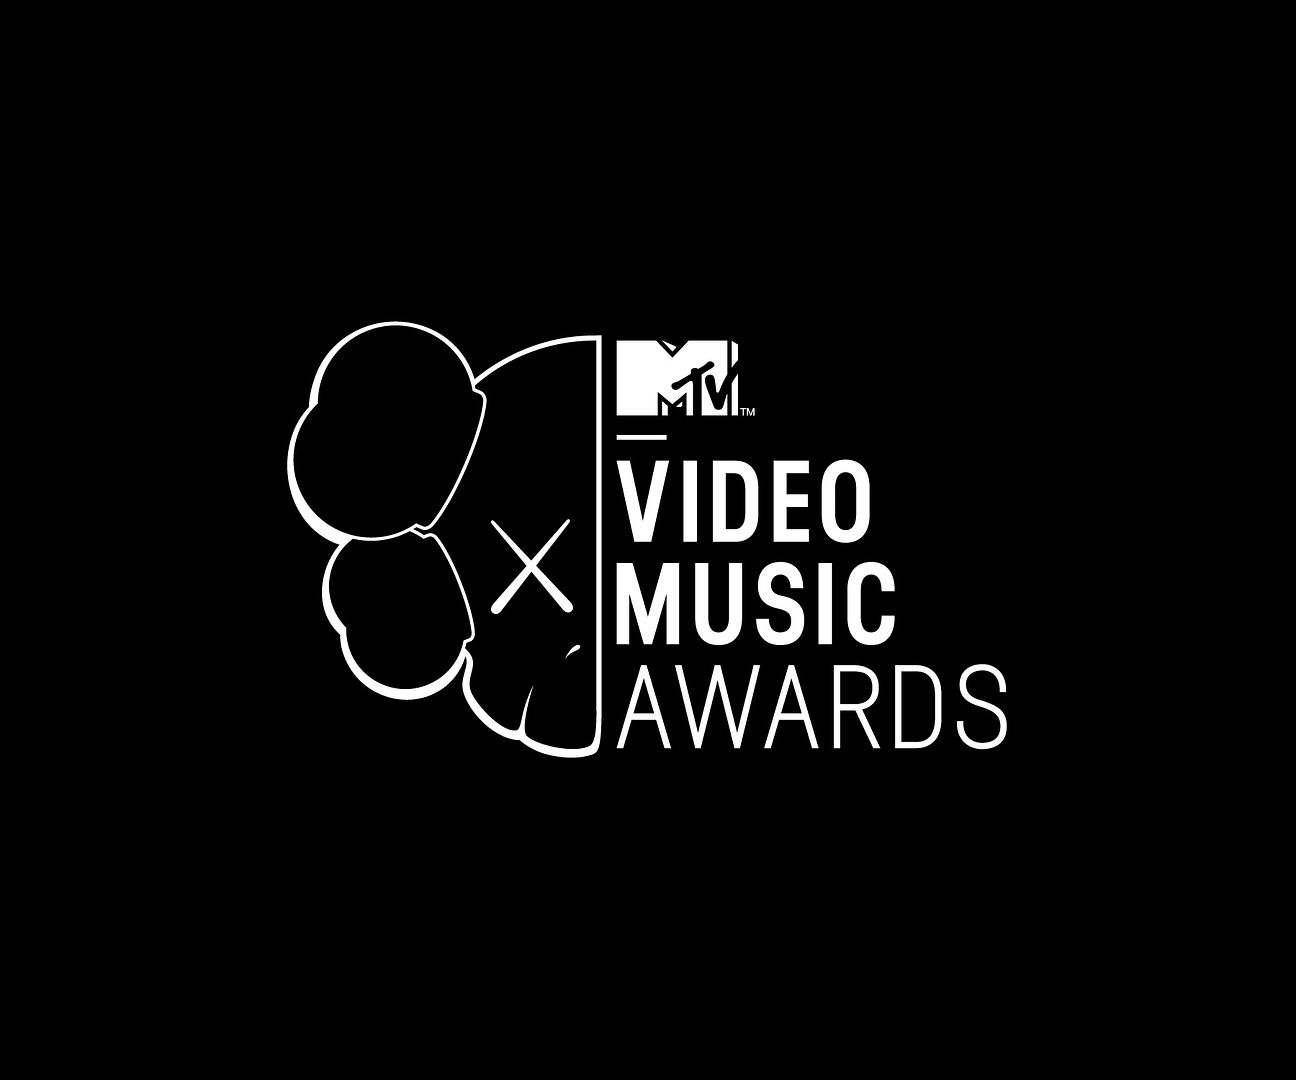 2013 MTV Video Music Awards photo 1800x1500.jpg